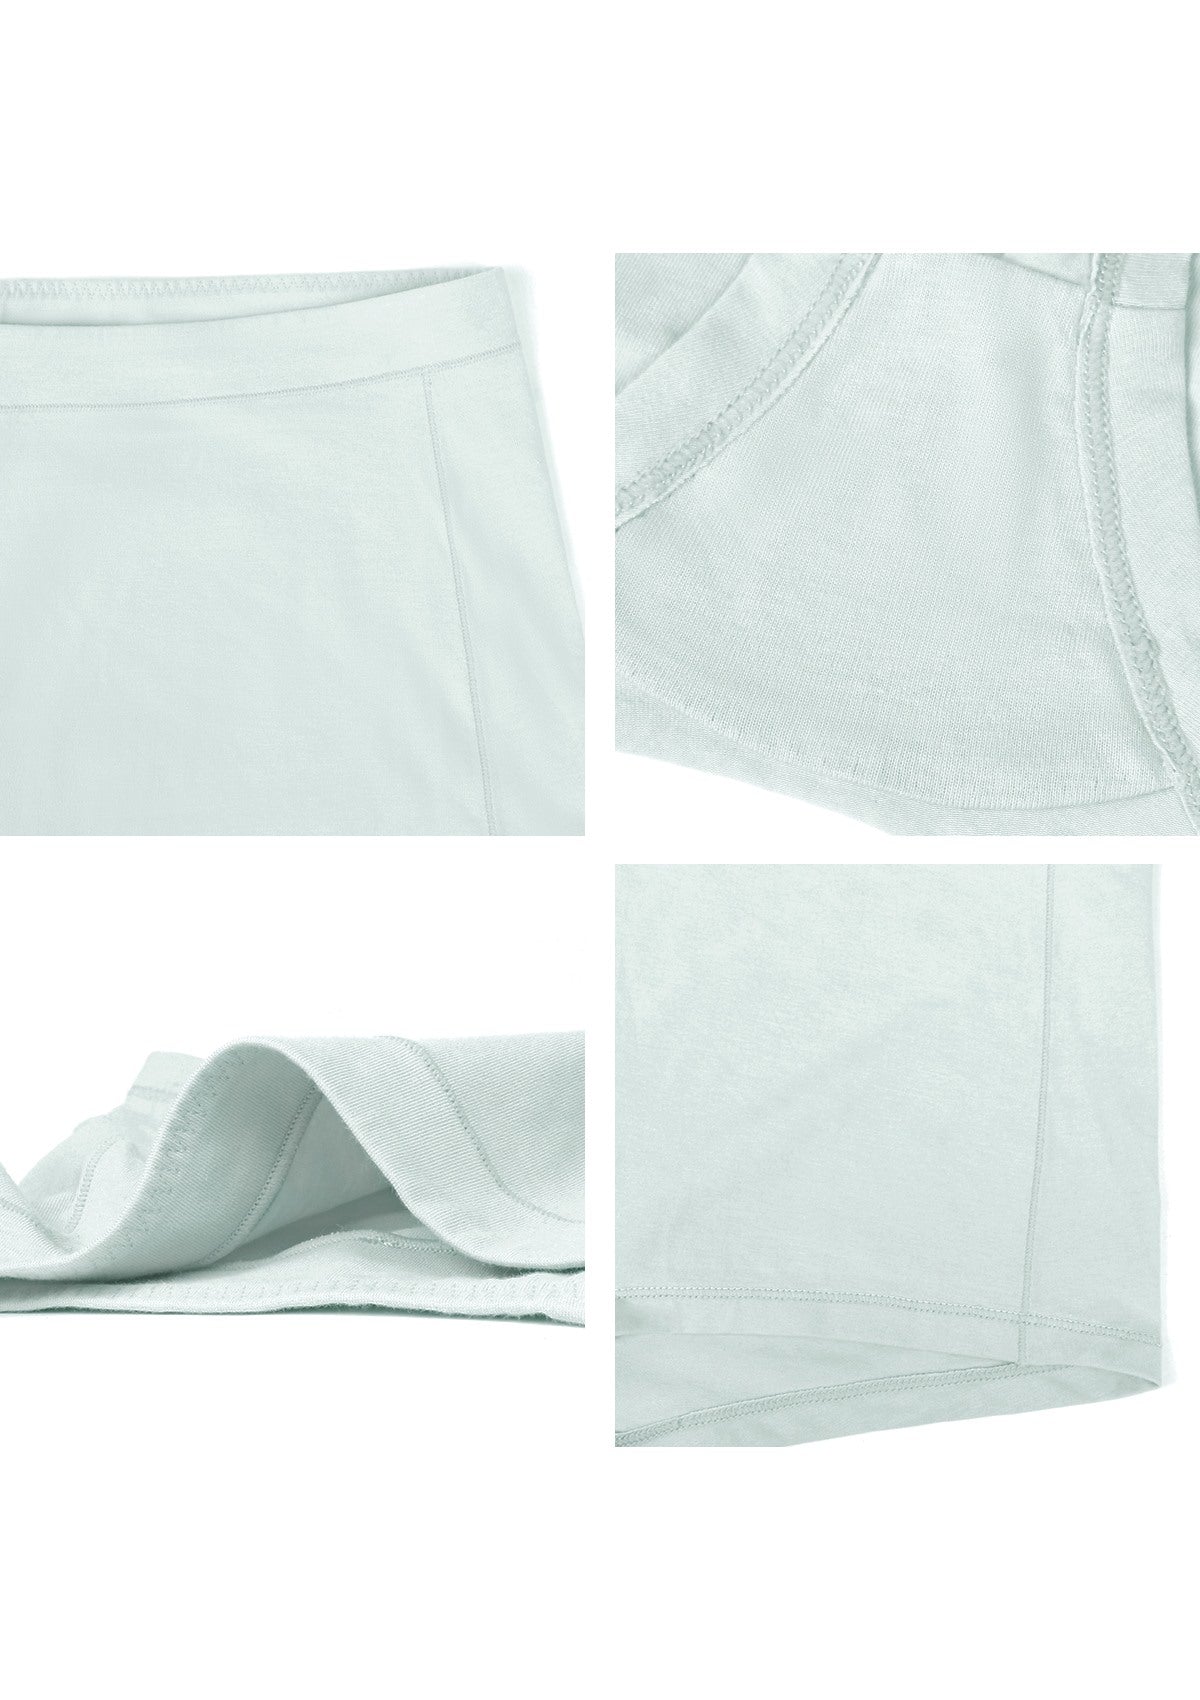 All-Day Comfort Mid-Rise Cotton Boyshorts Underwear 3 Pack - S / Black+White+Beige